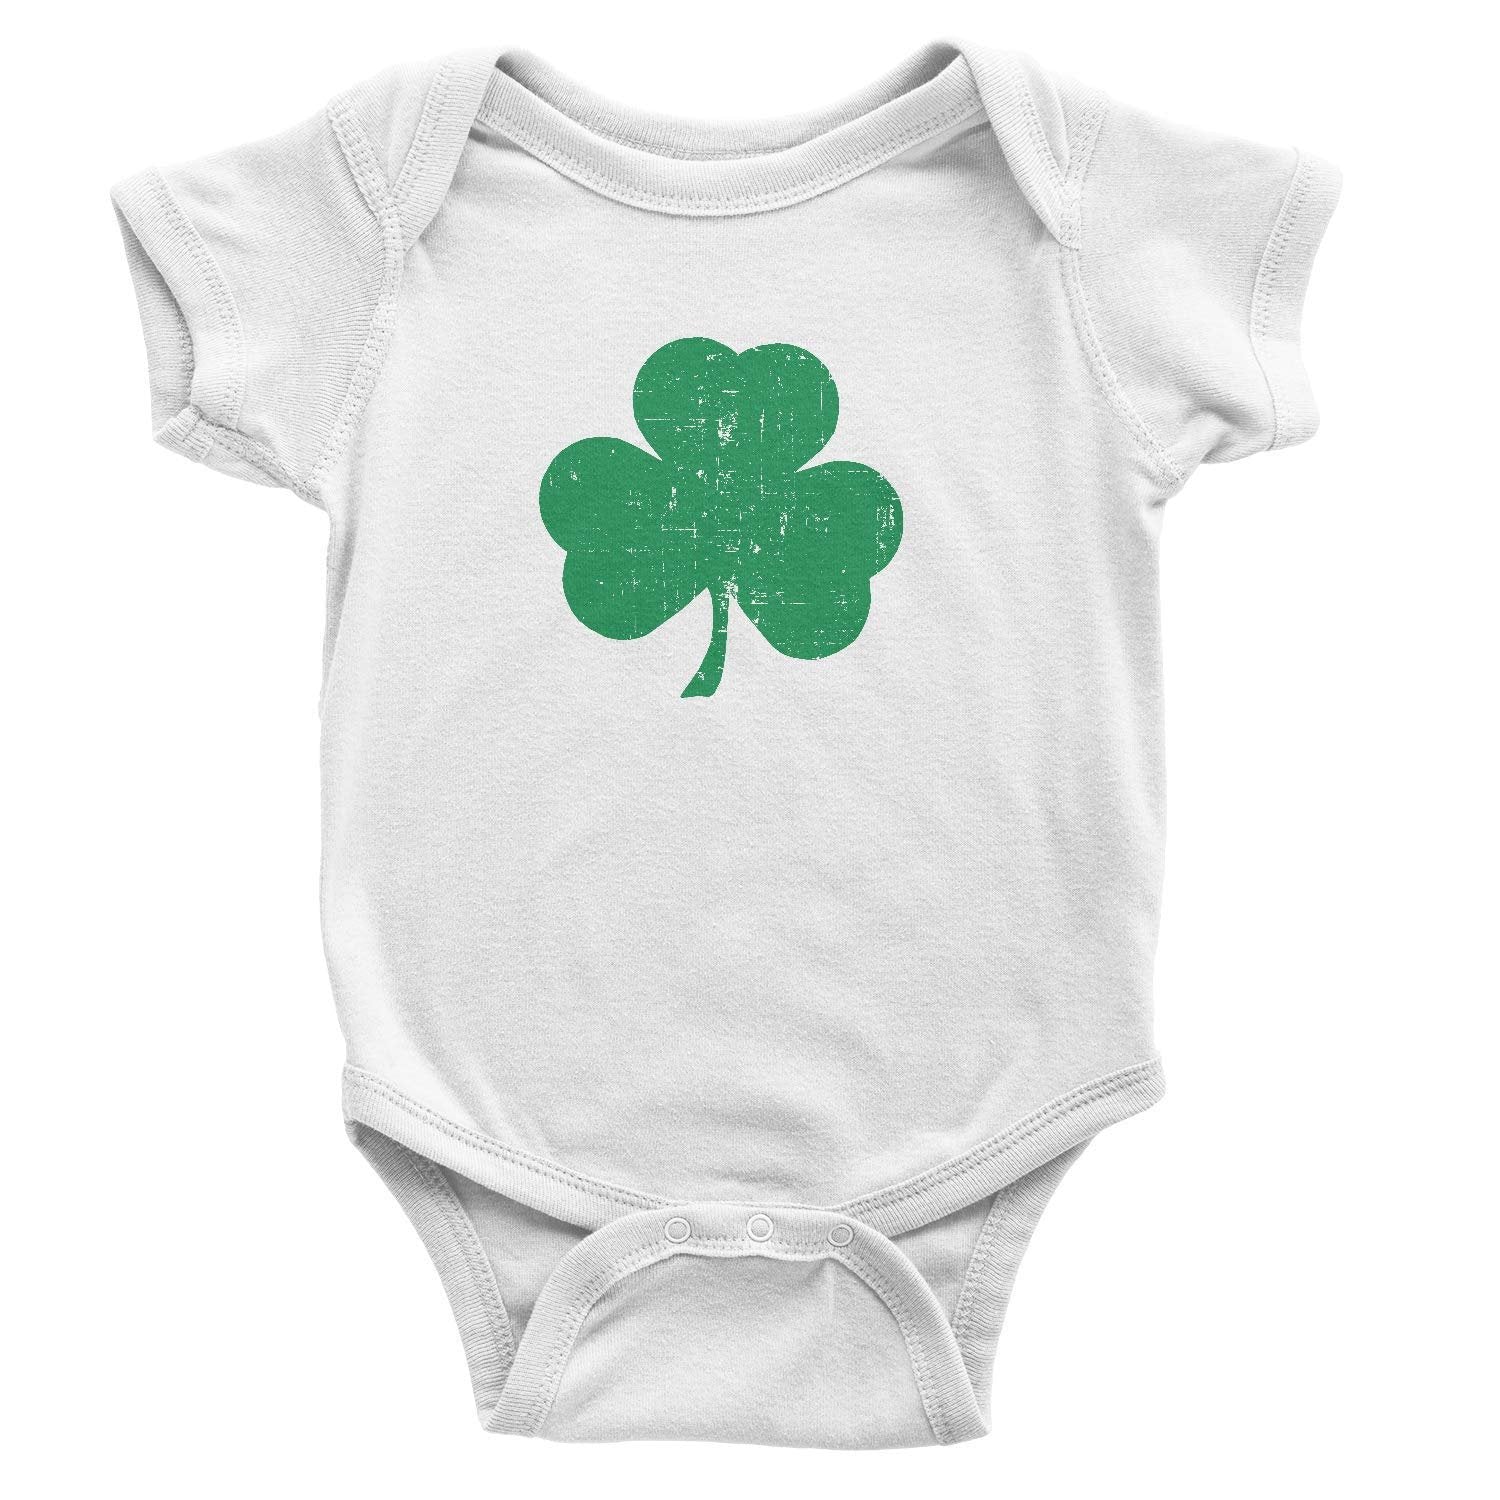 Shamrock Baby Bodysuit (Distressed Design, White & Green)